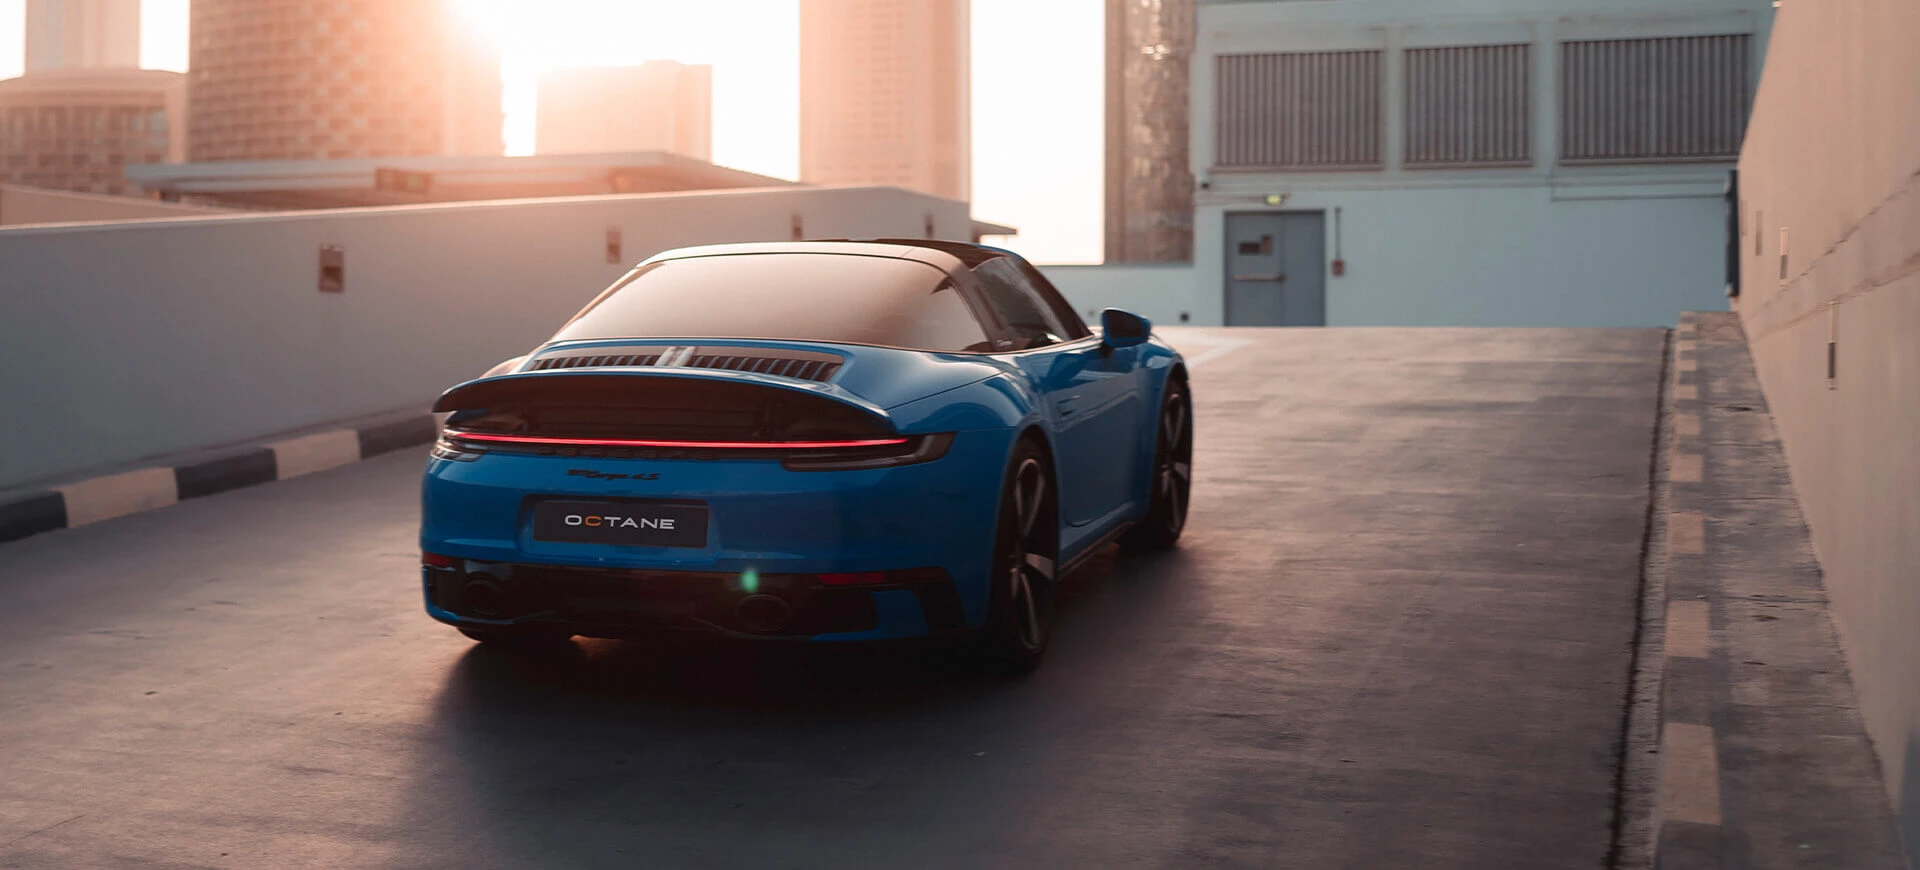 Hyr Porsche i Dubai